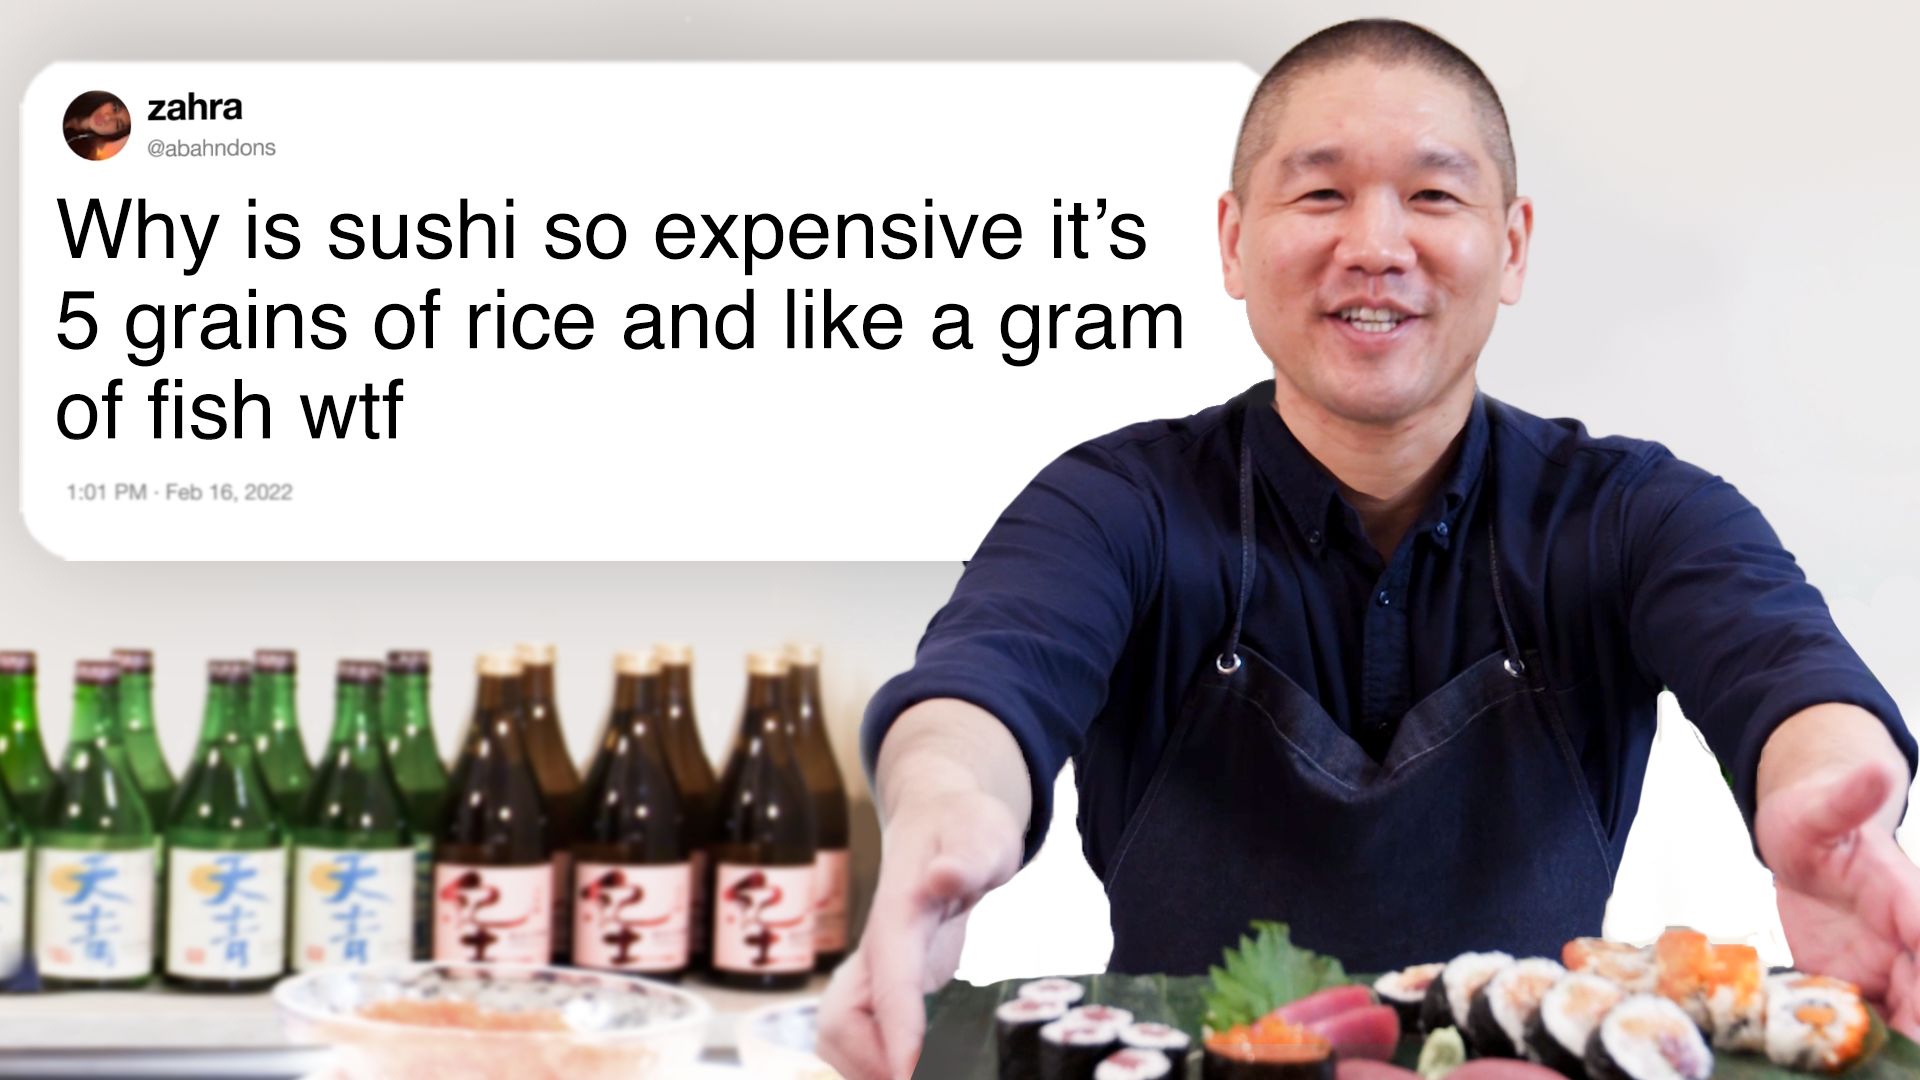 Makisu - Secrets of Sushi